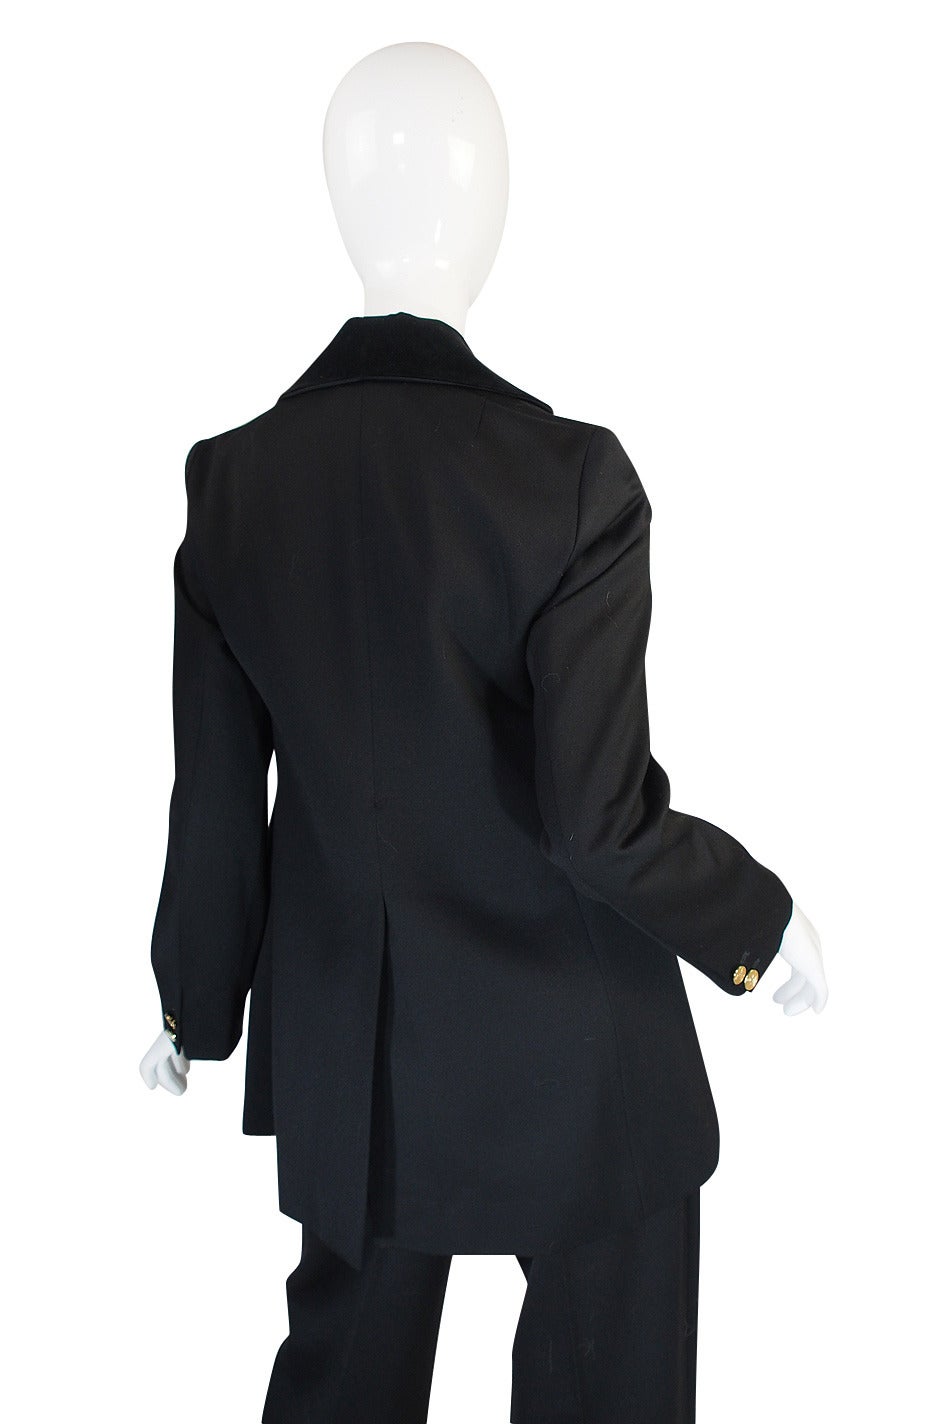 Rare 1990s Vivienne Westwood Black Tuxedo Suit at 1stdibs